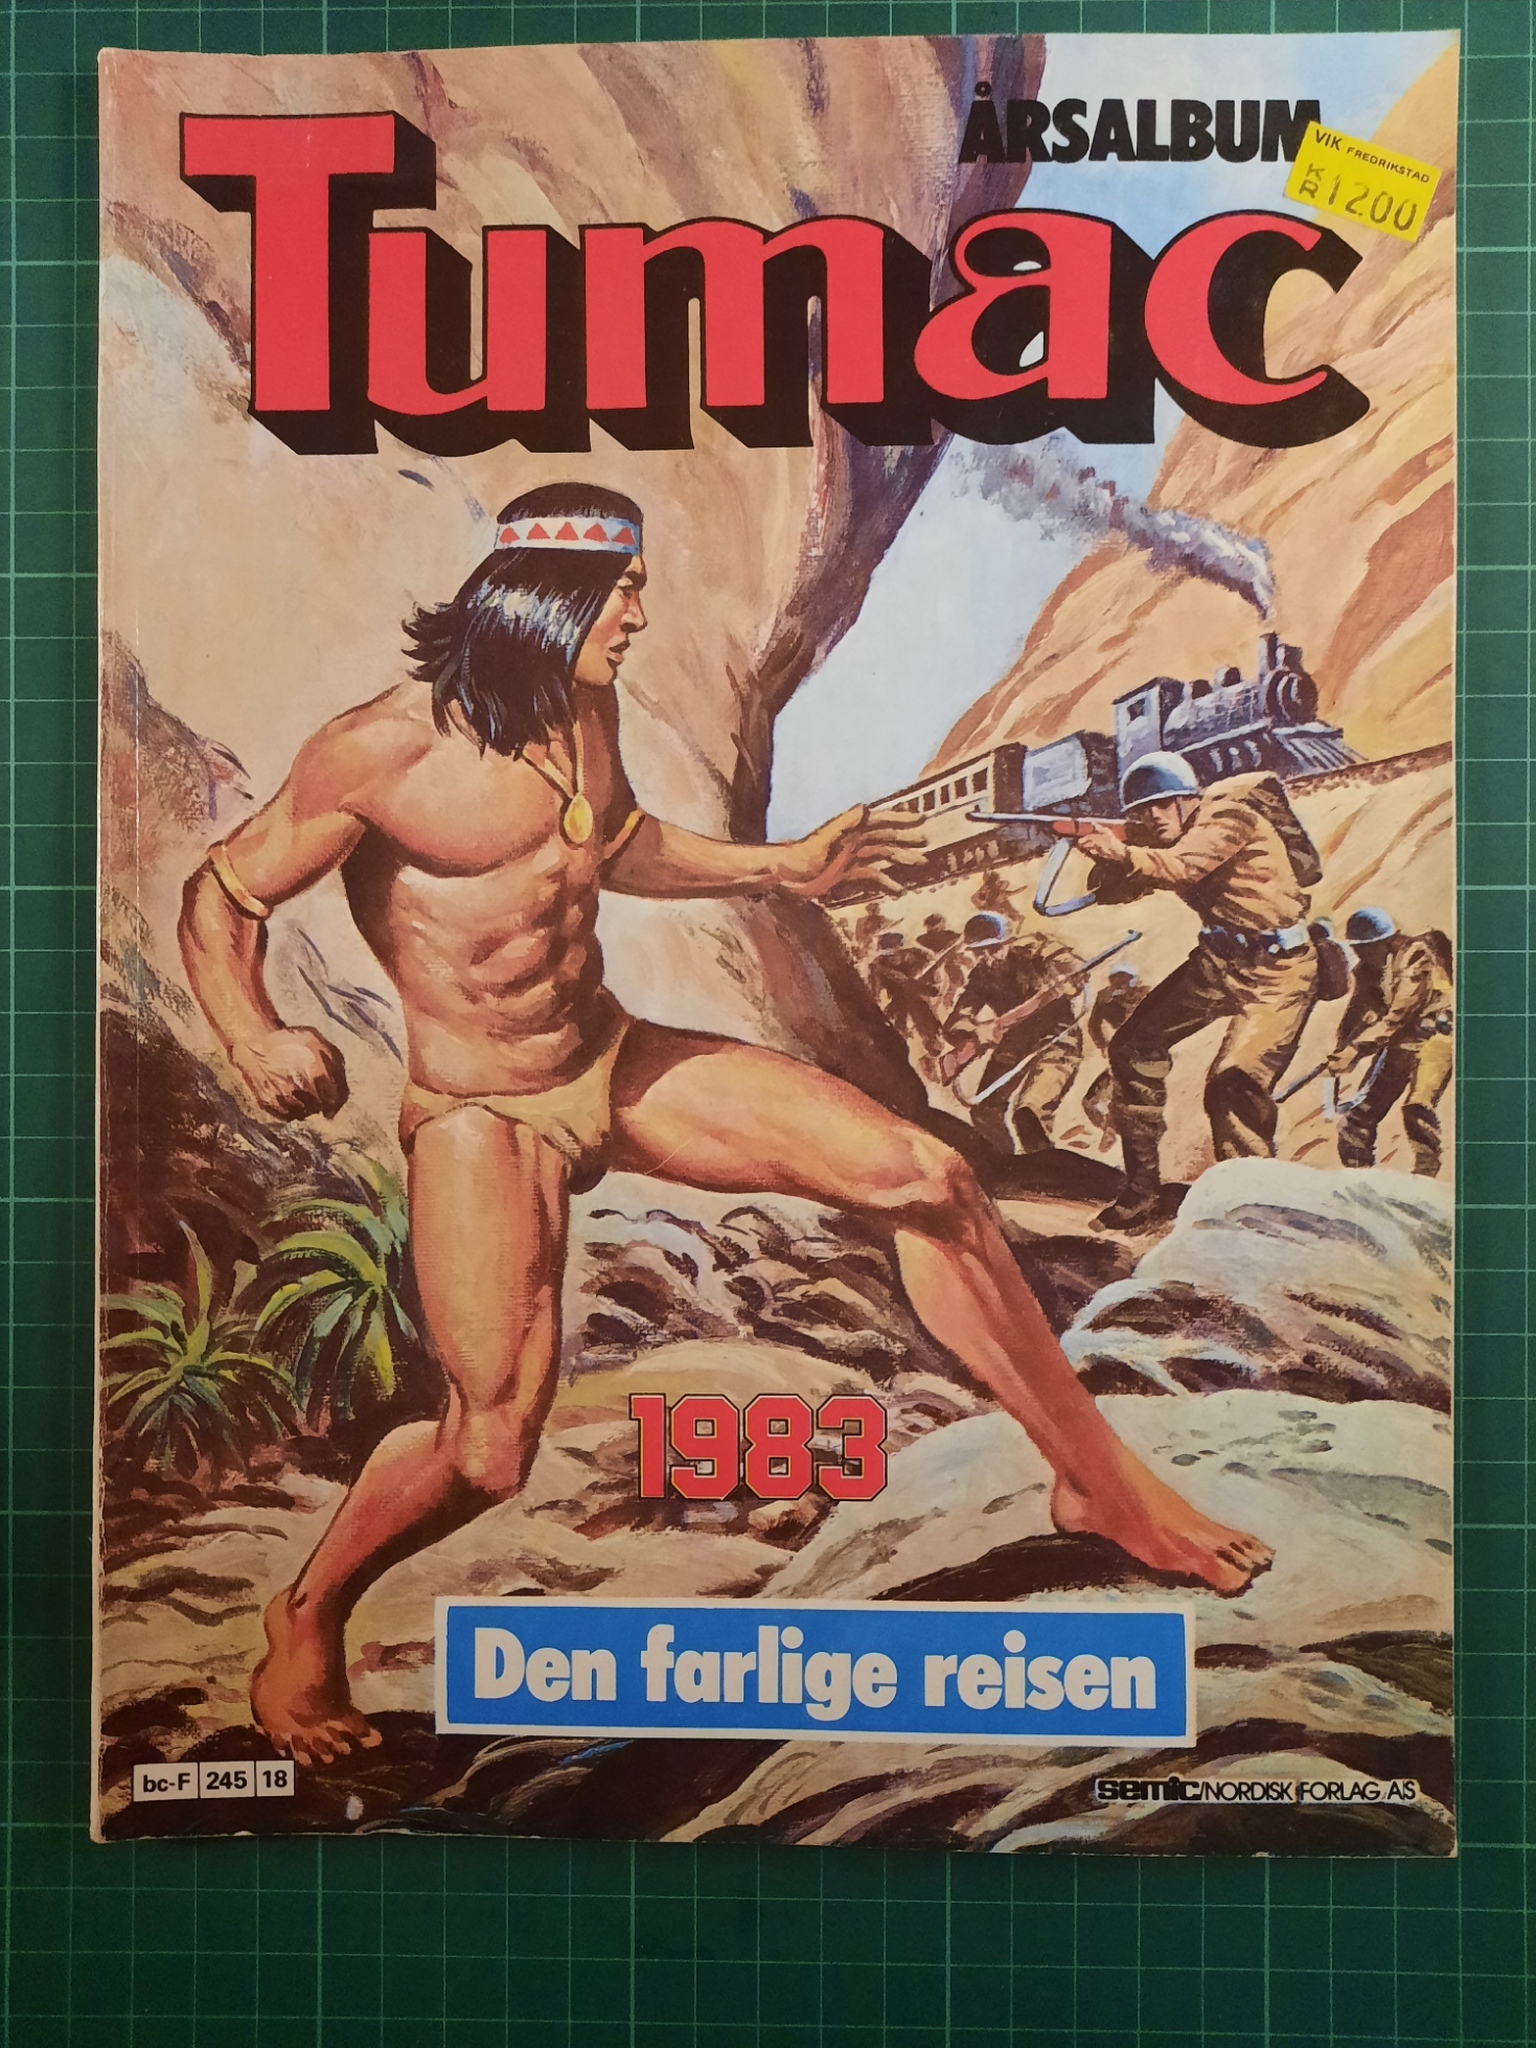 Tumac : Årsalbum 1983